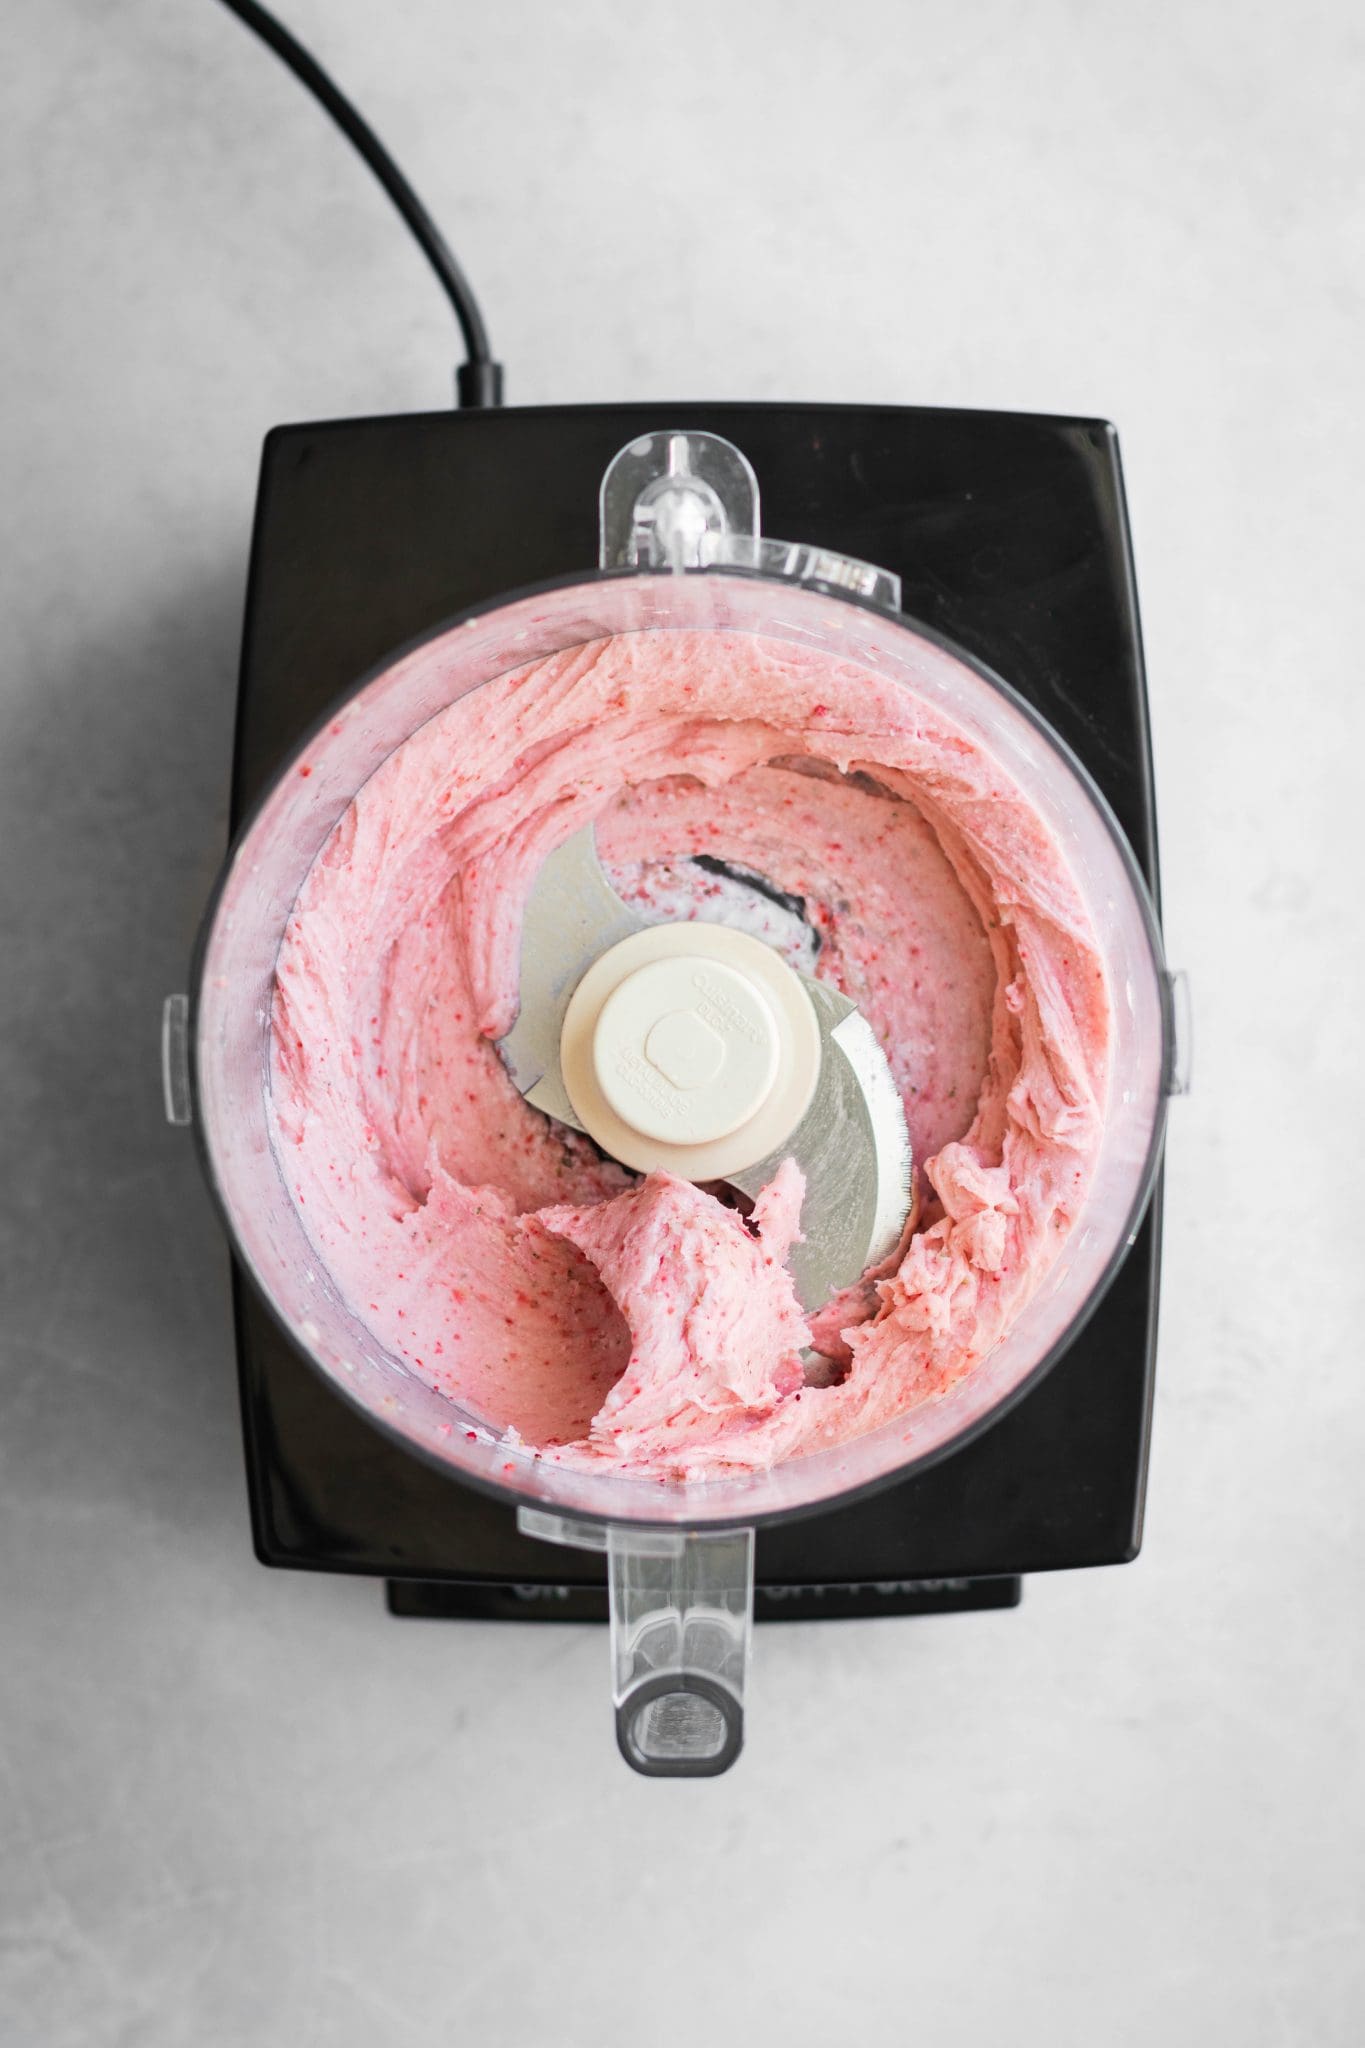 strawberry banana ice cream in a food processor